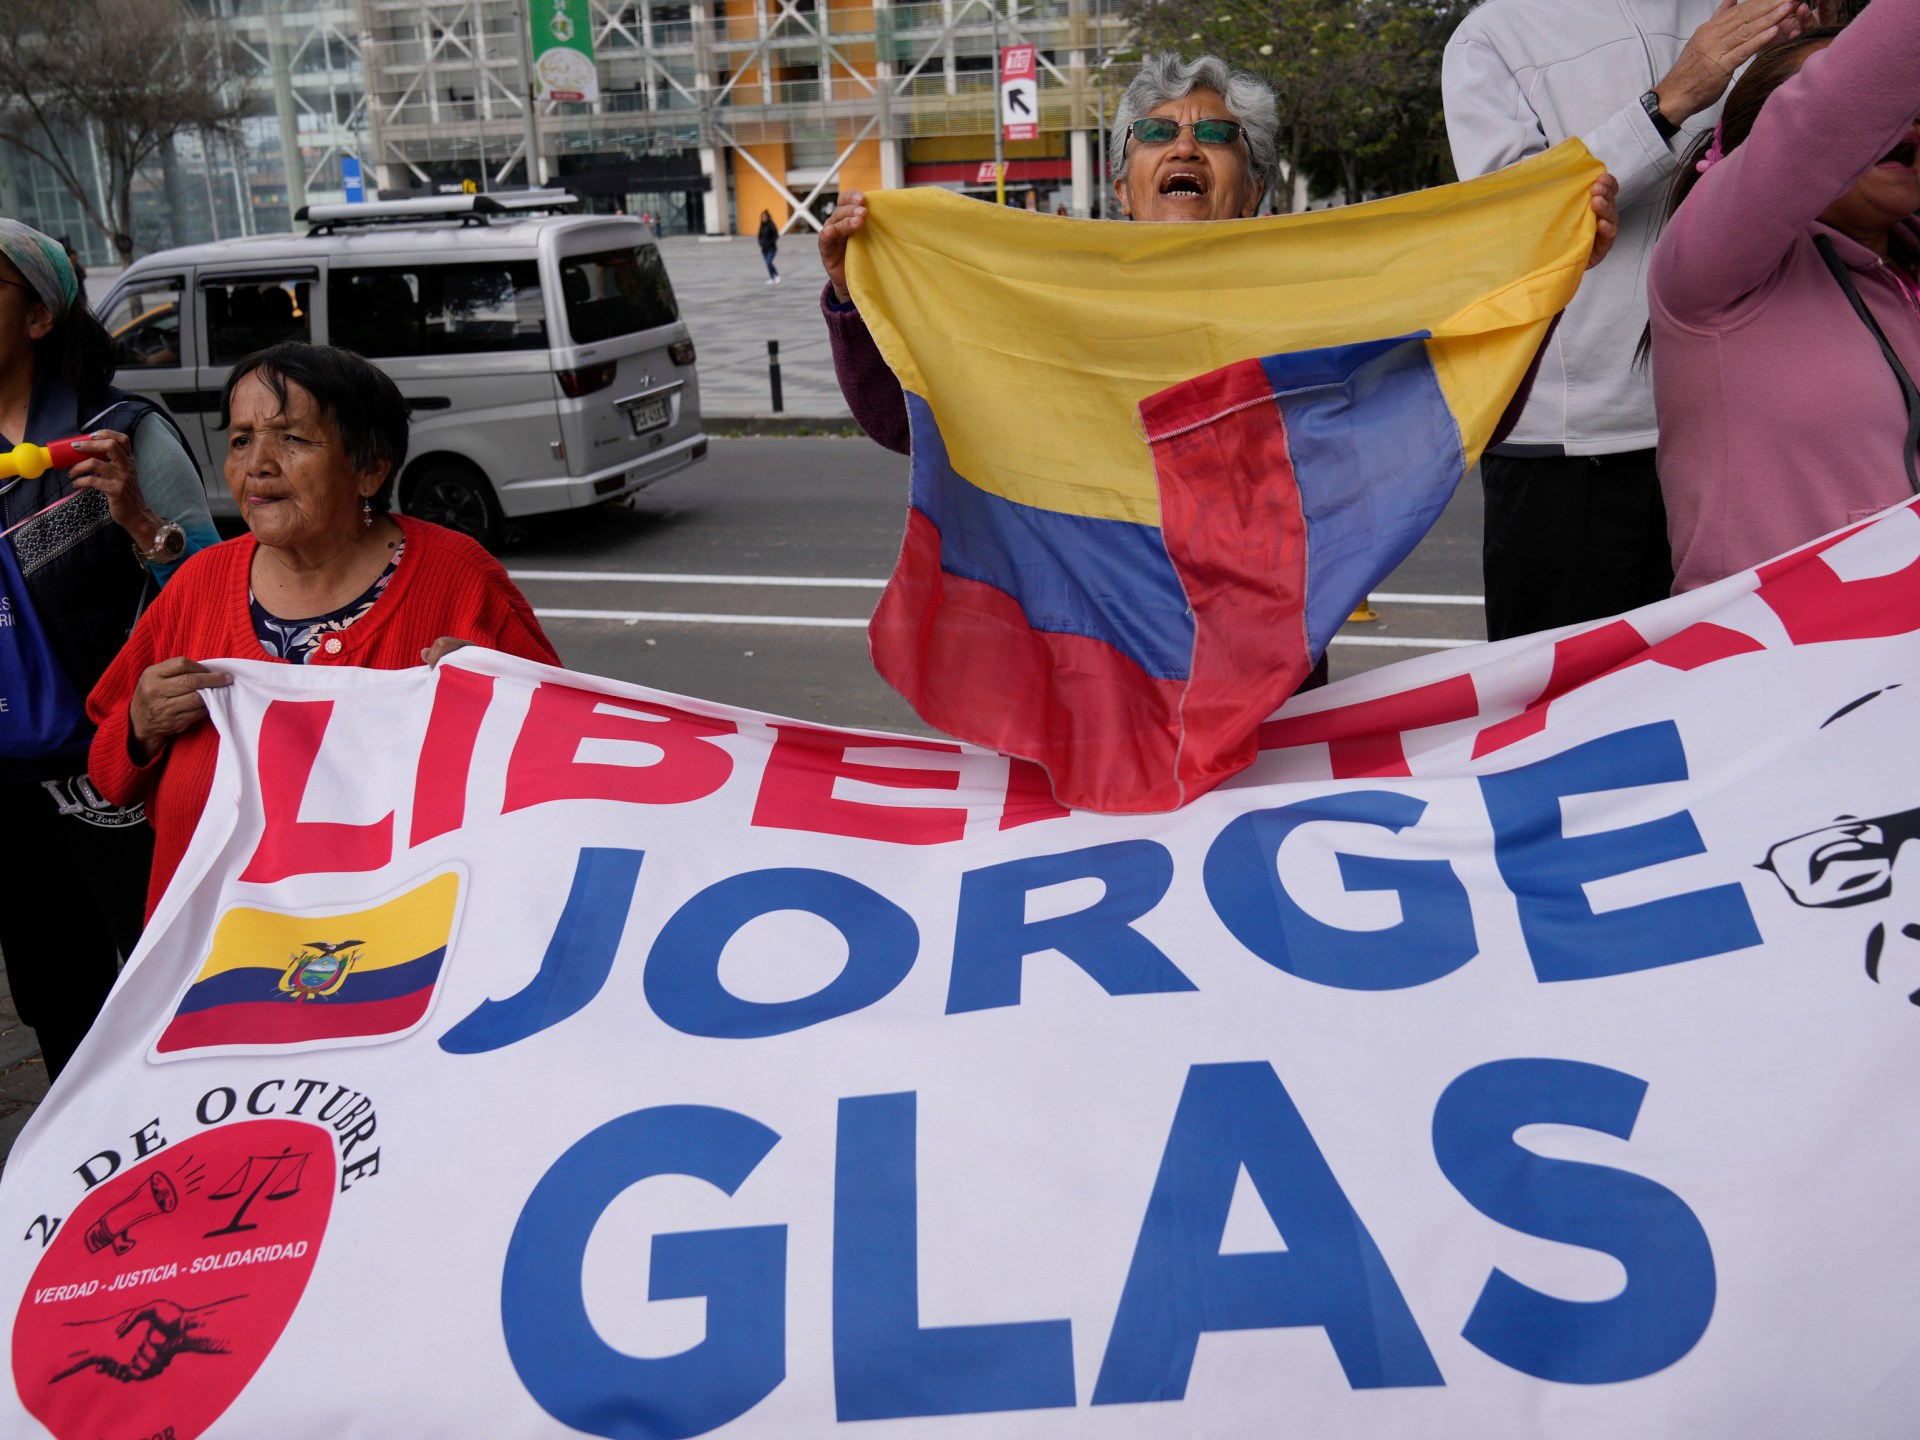 Ecuador spat: Trotsky to the shah, Mexico’s long history as home to exiles